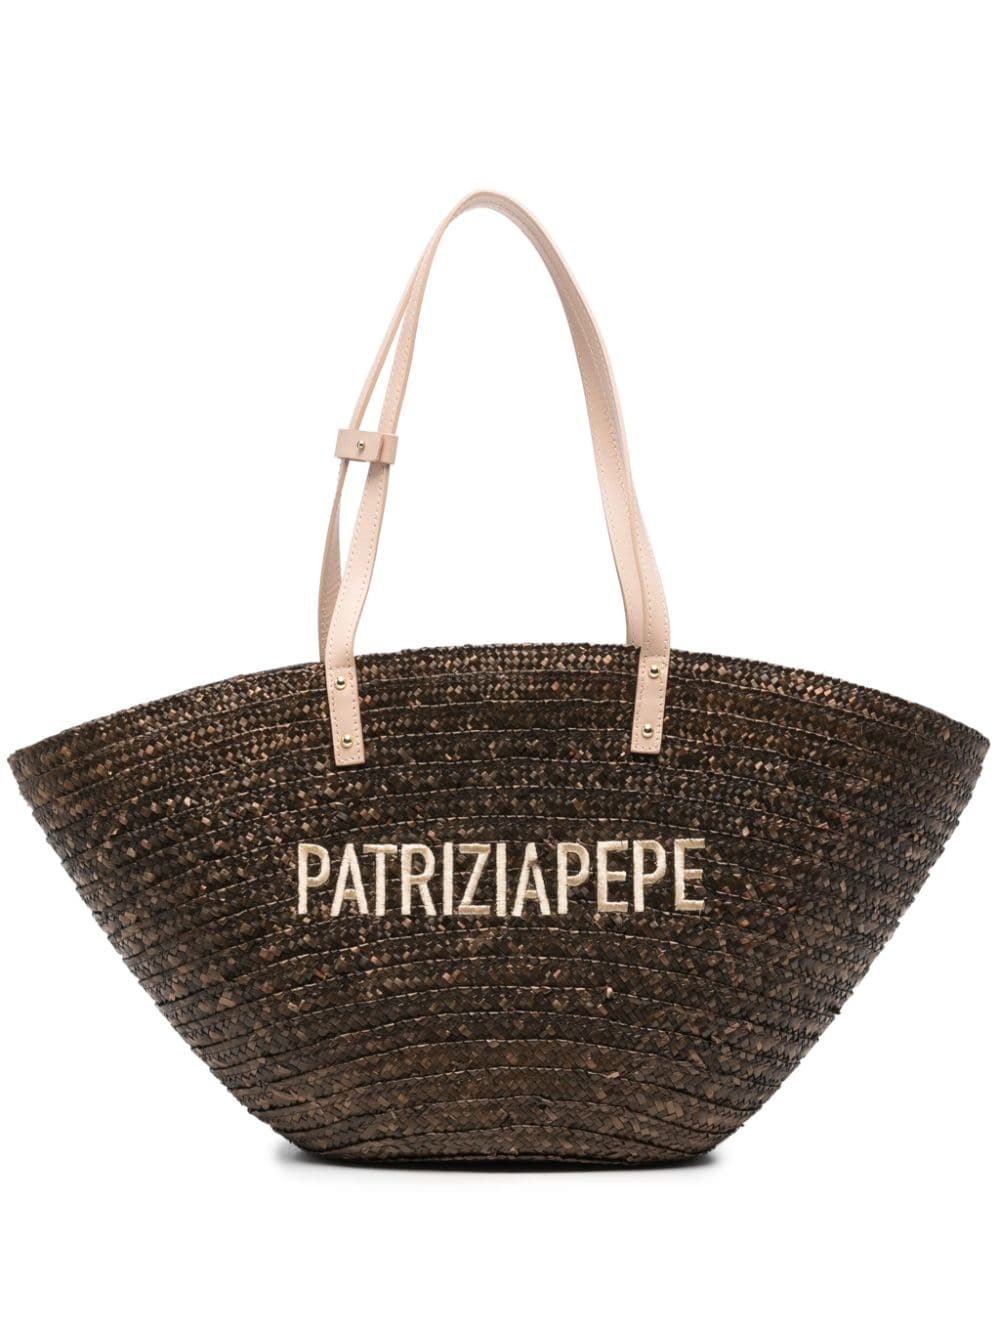 Image 1 of Patrizia Pepe logo-embroidered tote bag